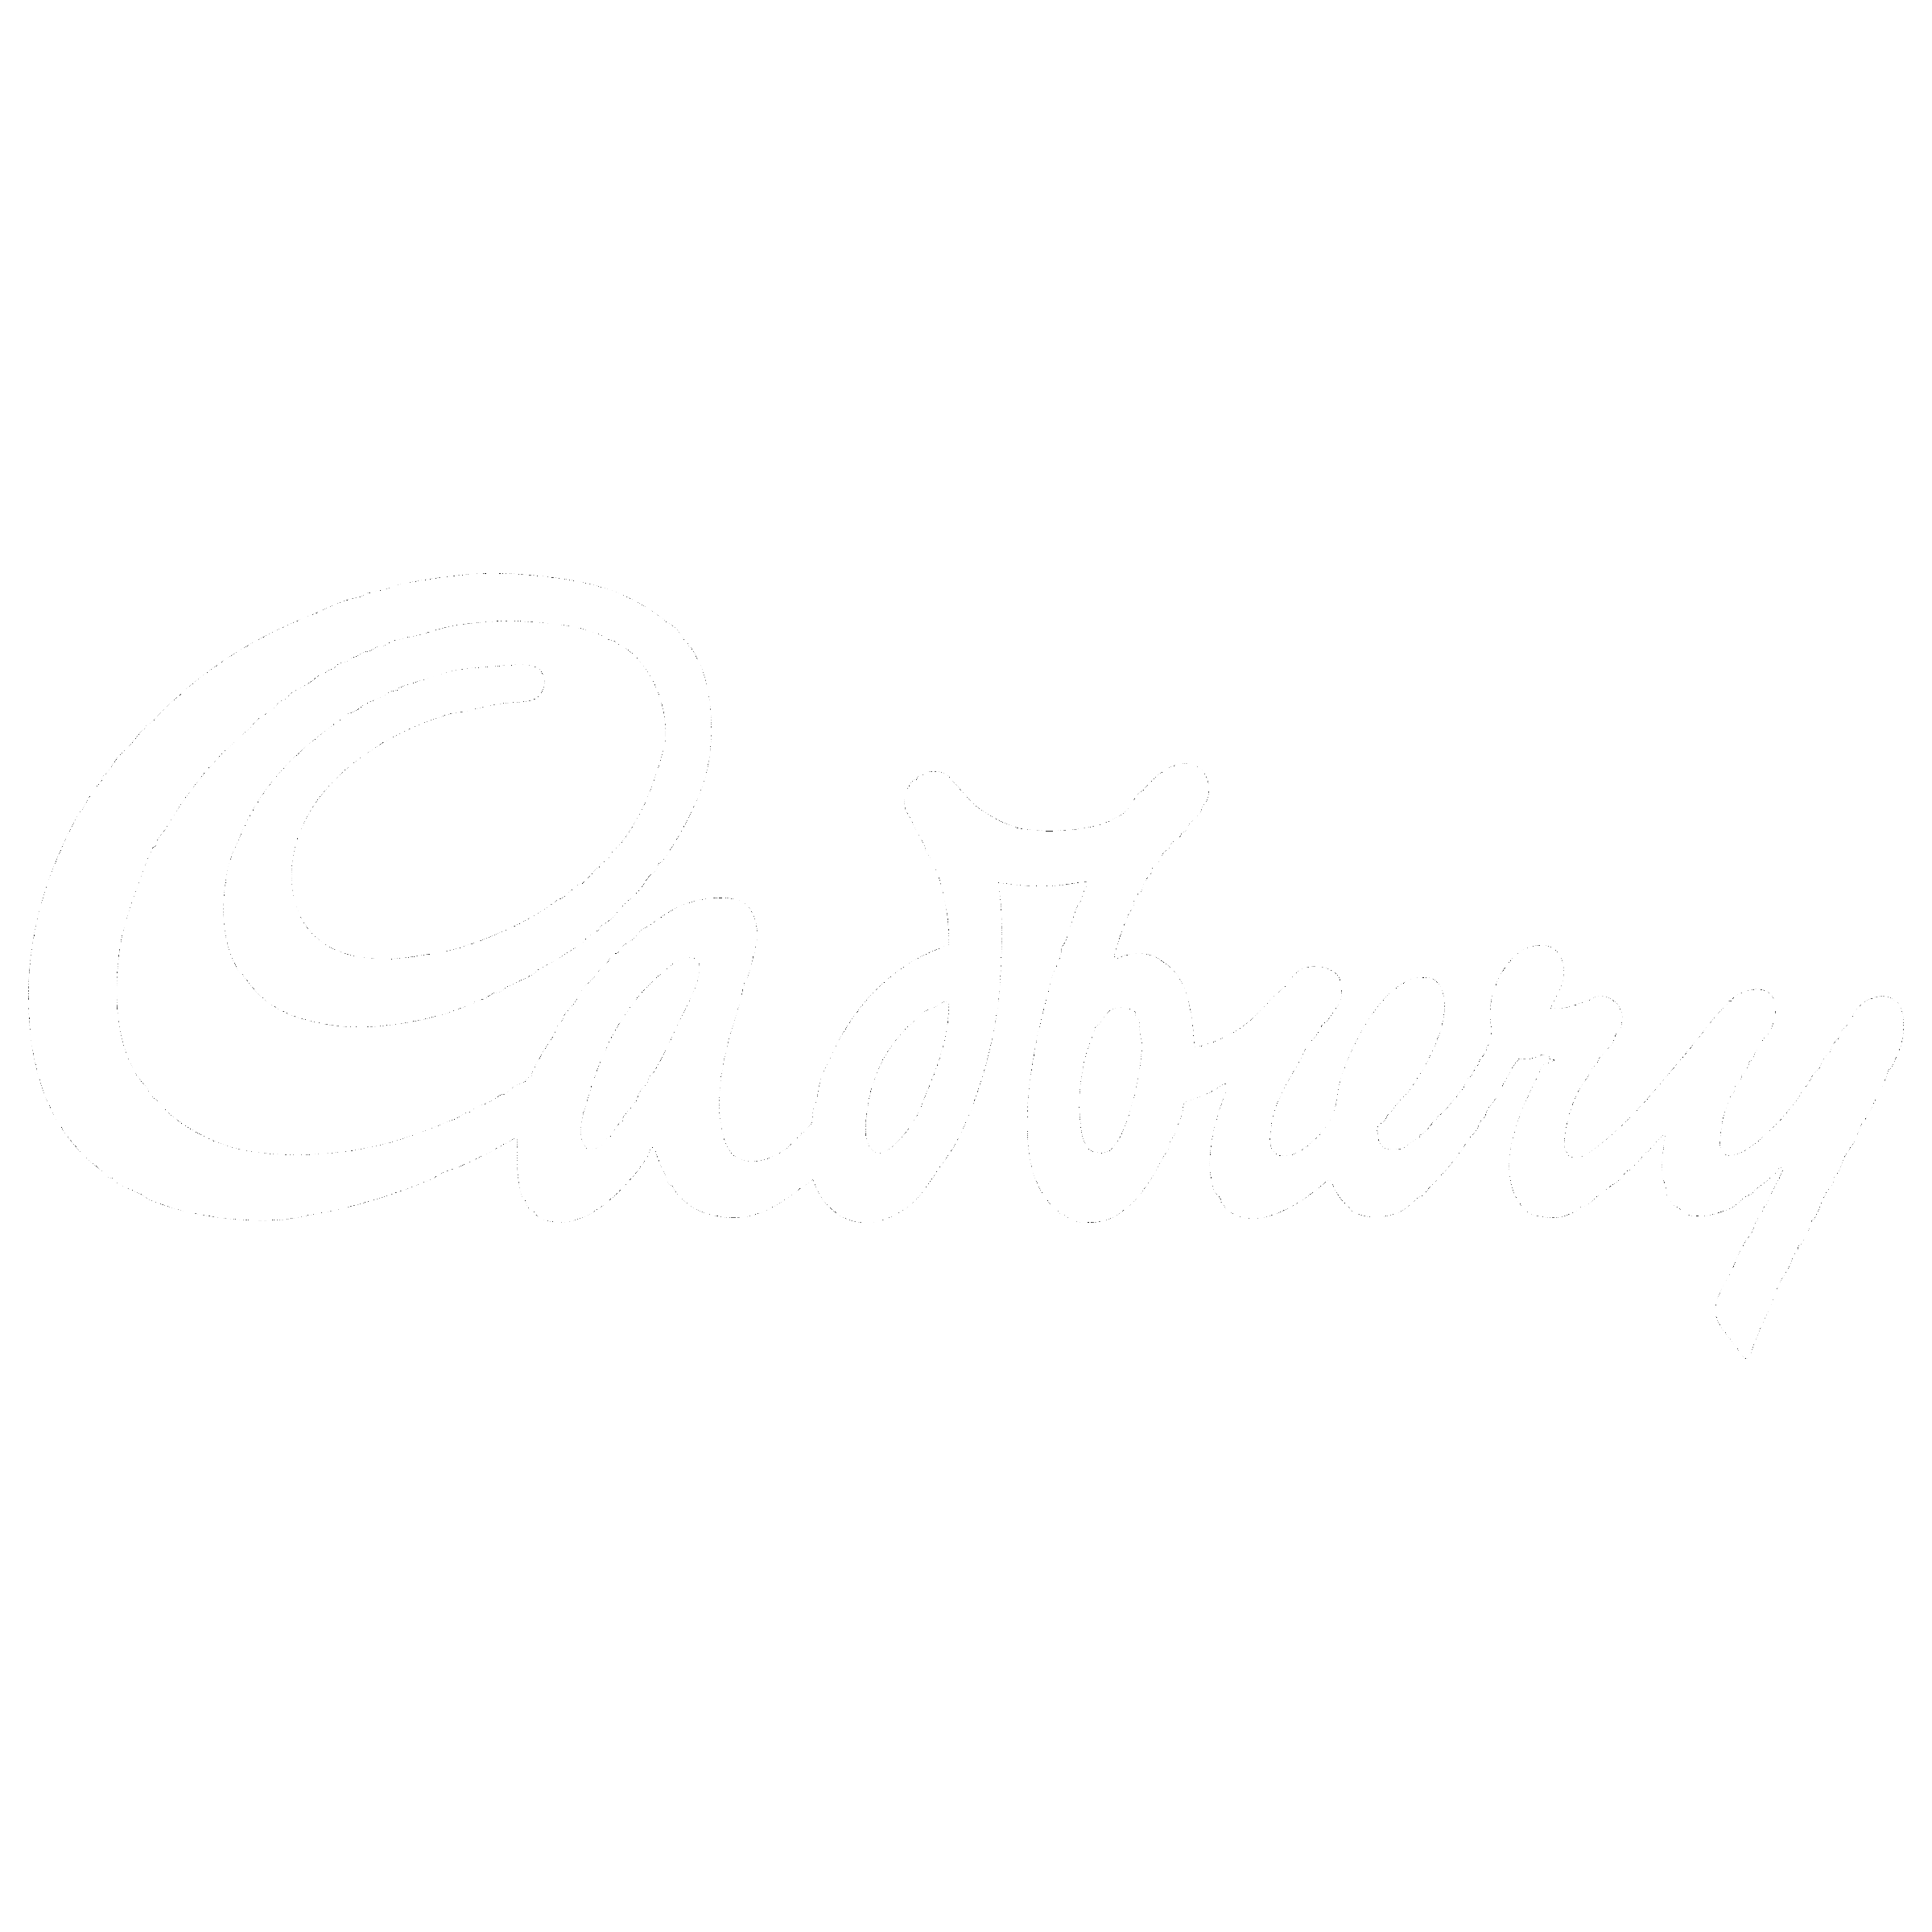 Who I Worked With - Cadbury Logo